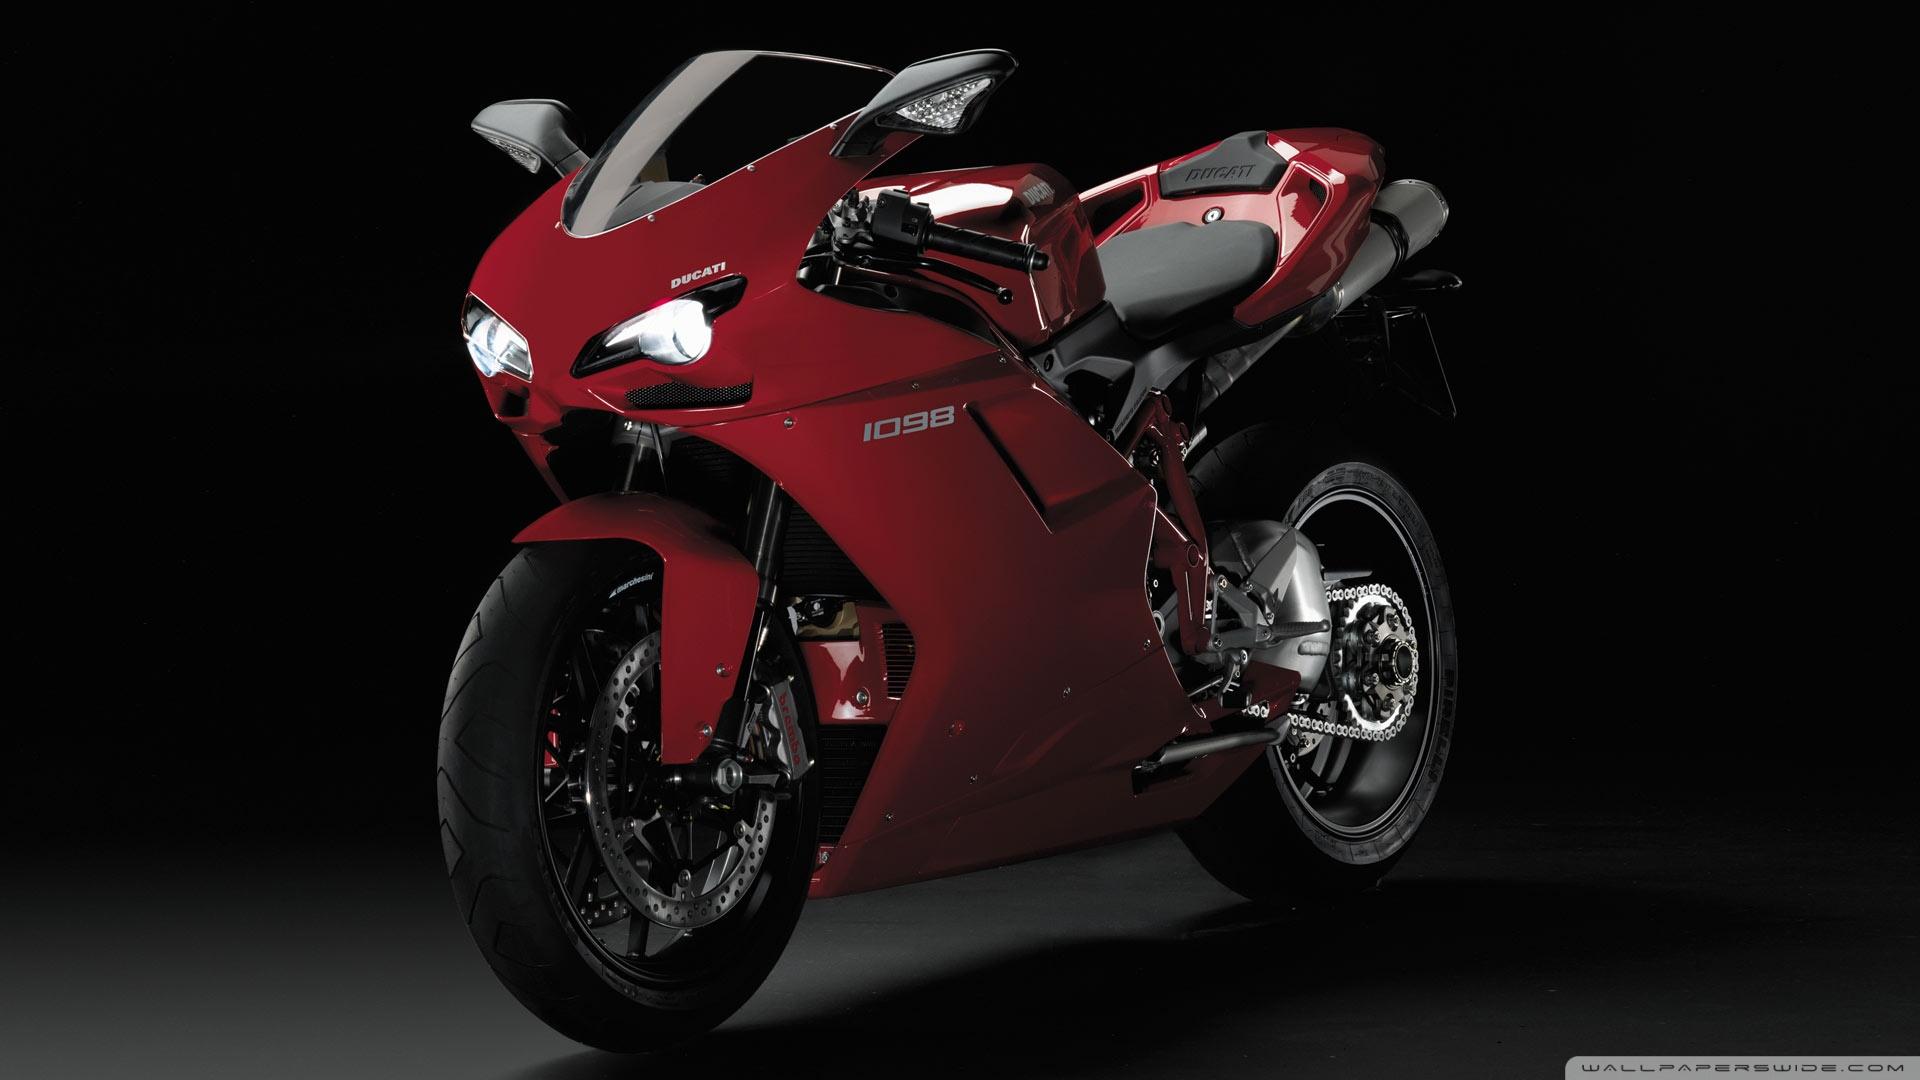 Ducati 1098 Superbike HD desktop wallpaper, Widescreen, High